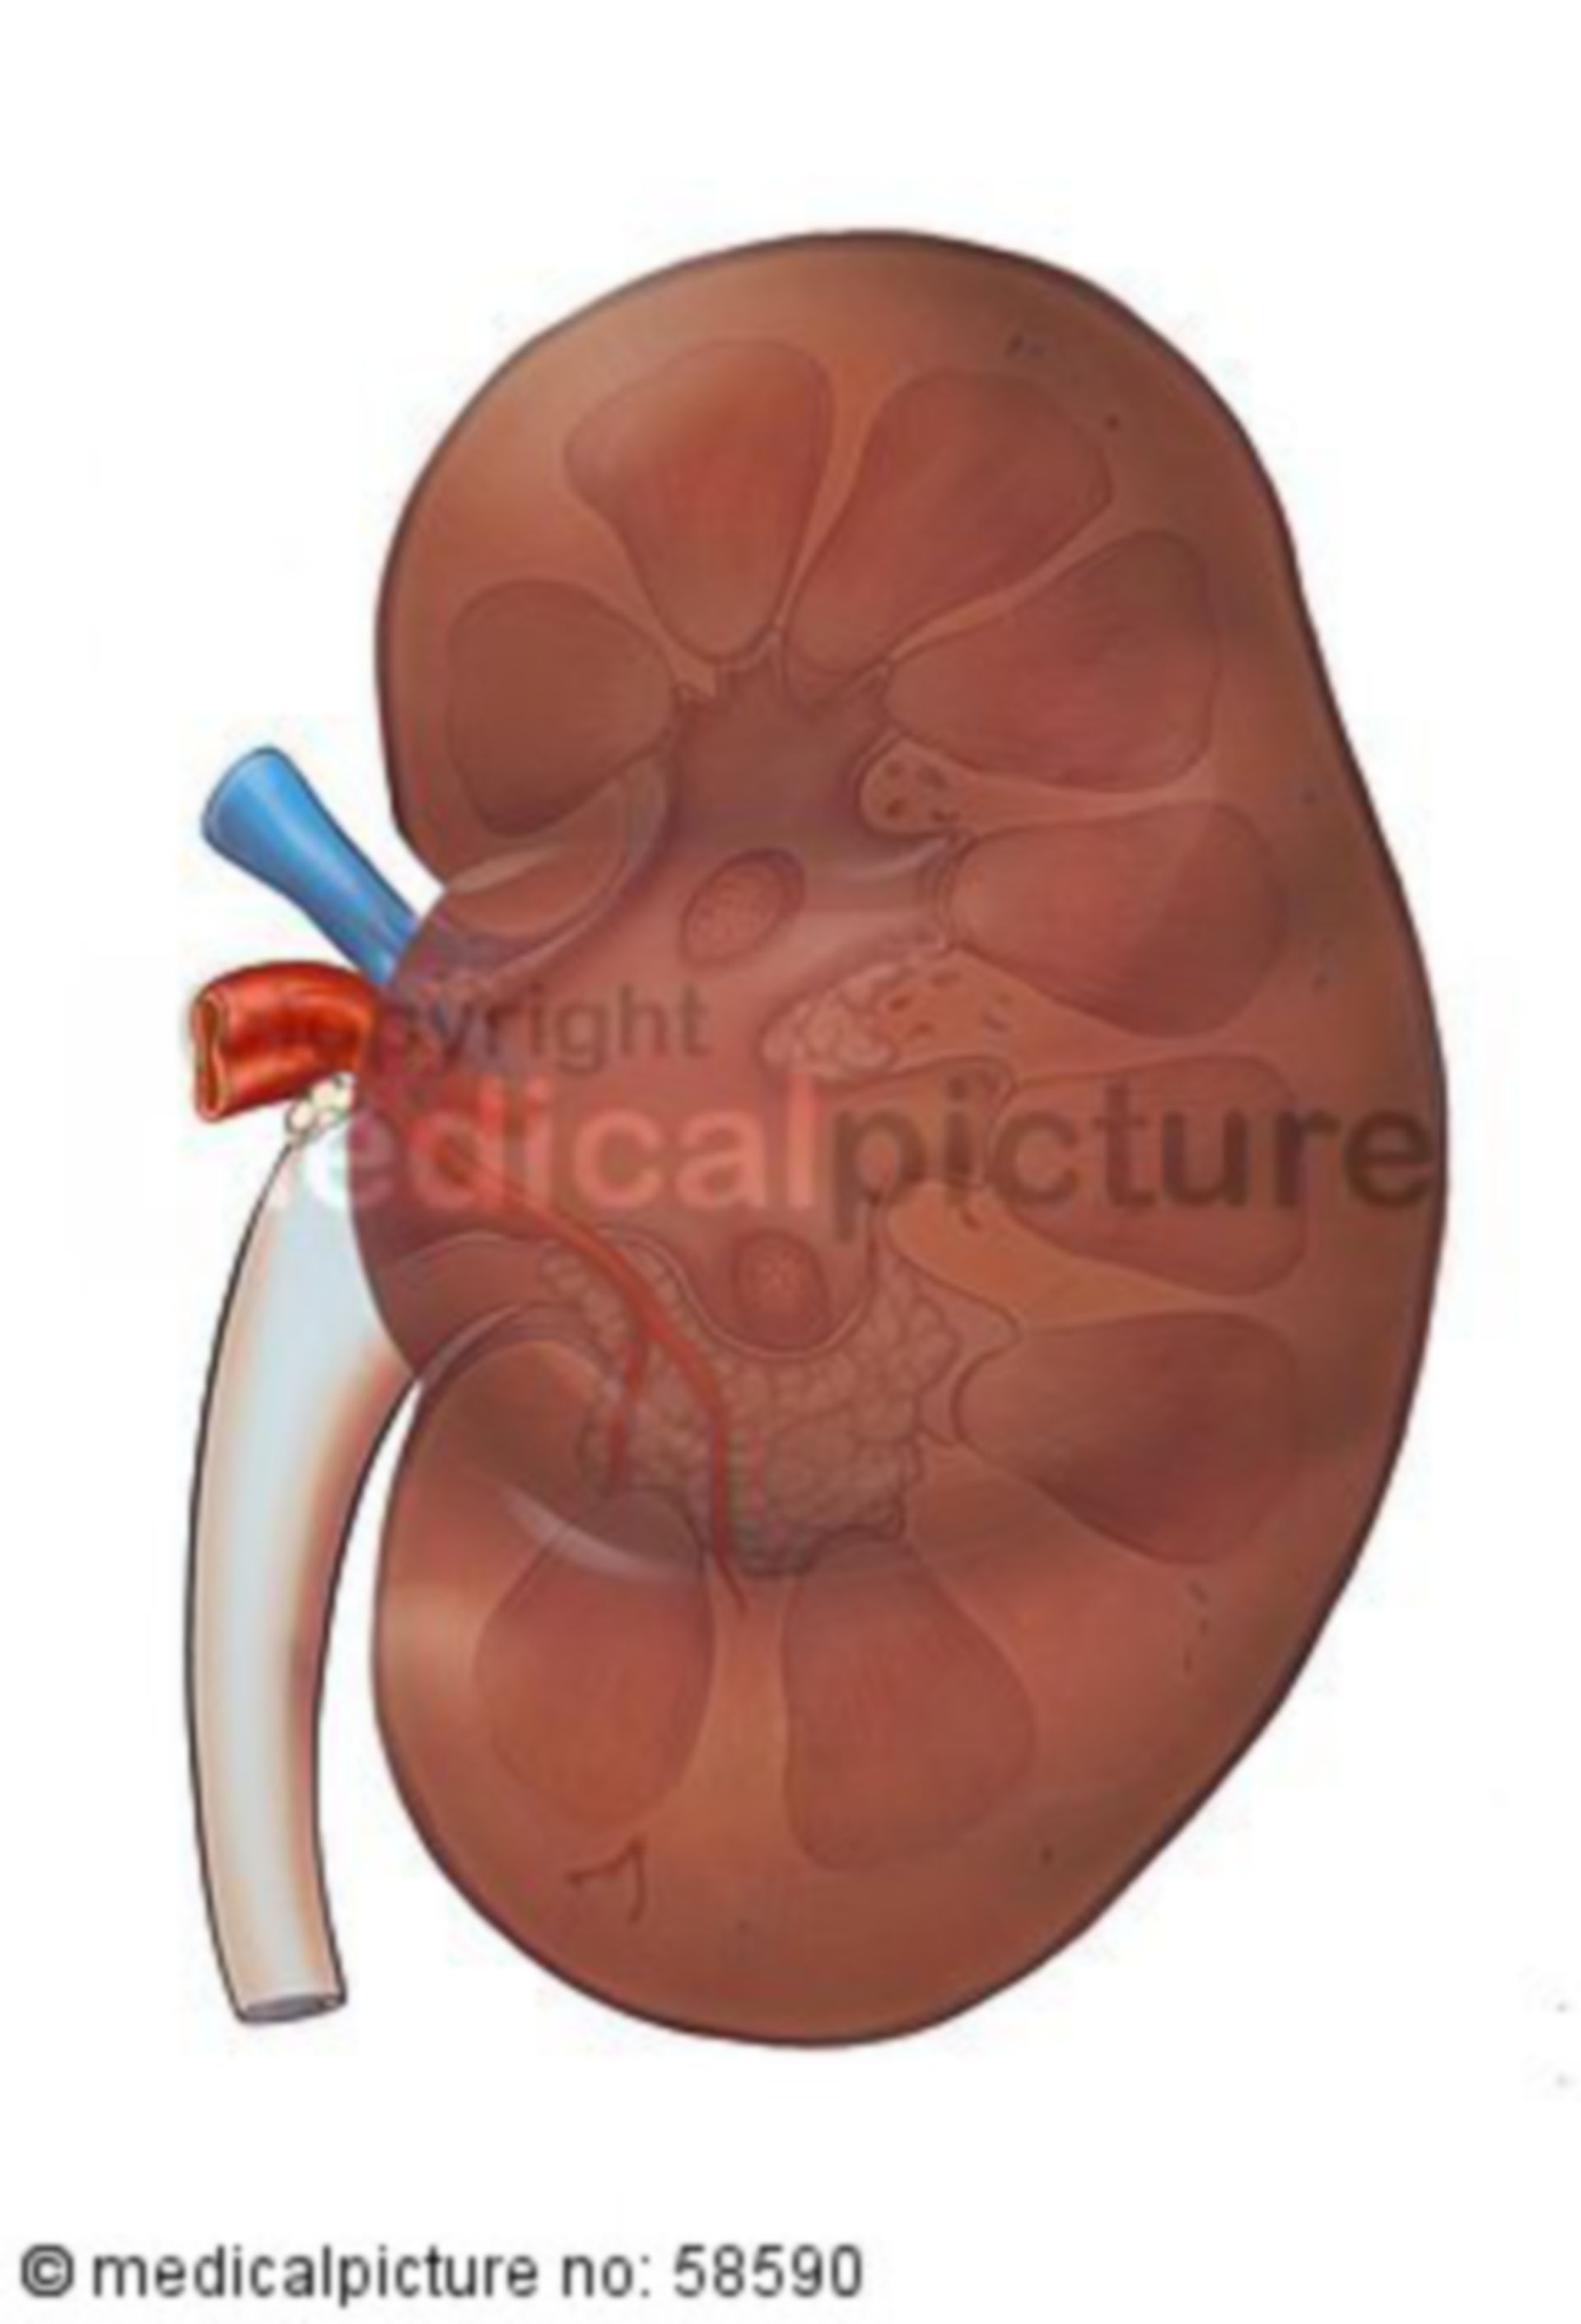 Kidney